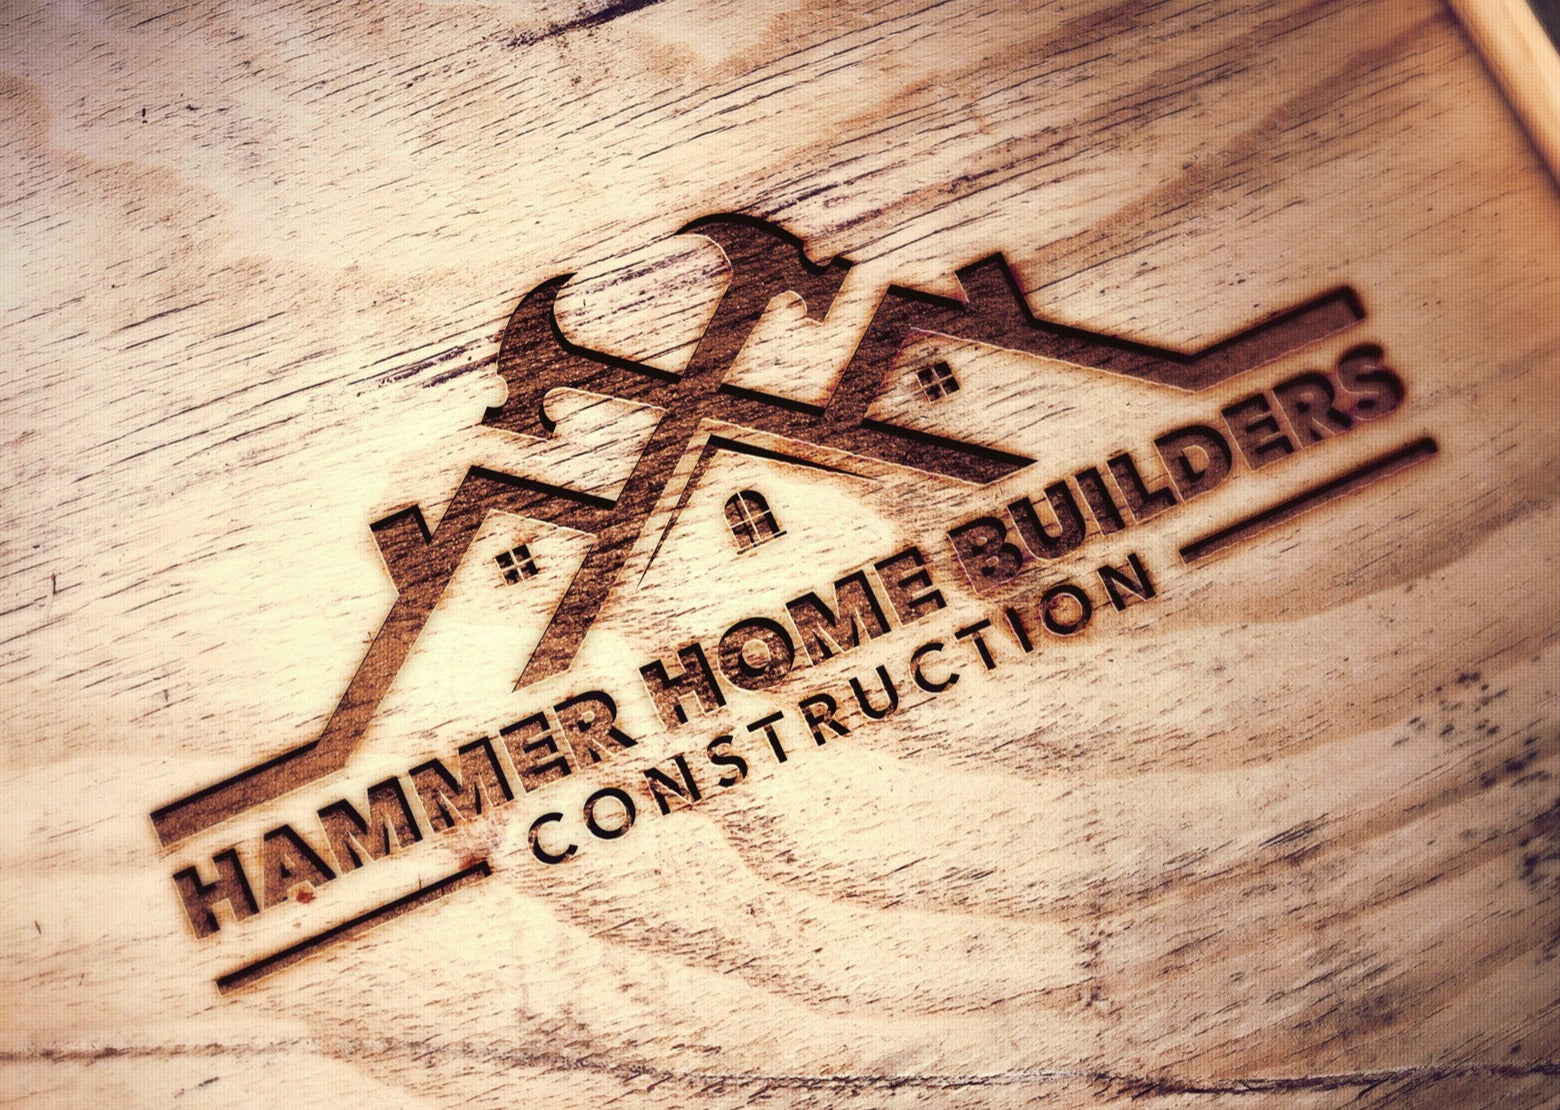 Construction Logo | Real Estate Logo | Logo Design | Real Estate Business | Construction Company | Roofing Logo | Roofers | Real Estate Agent